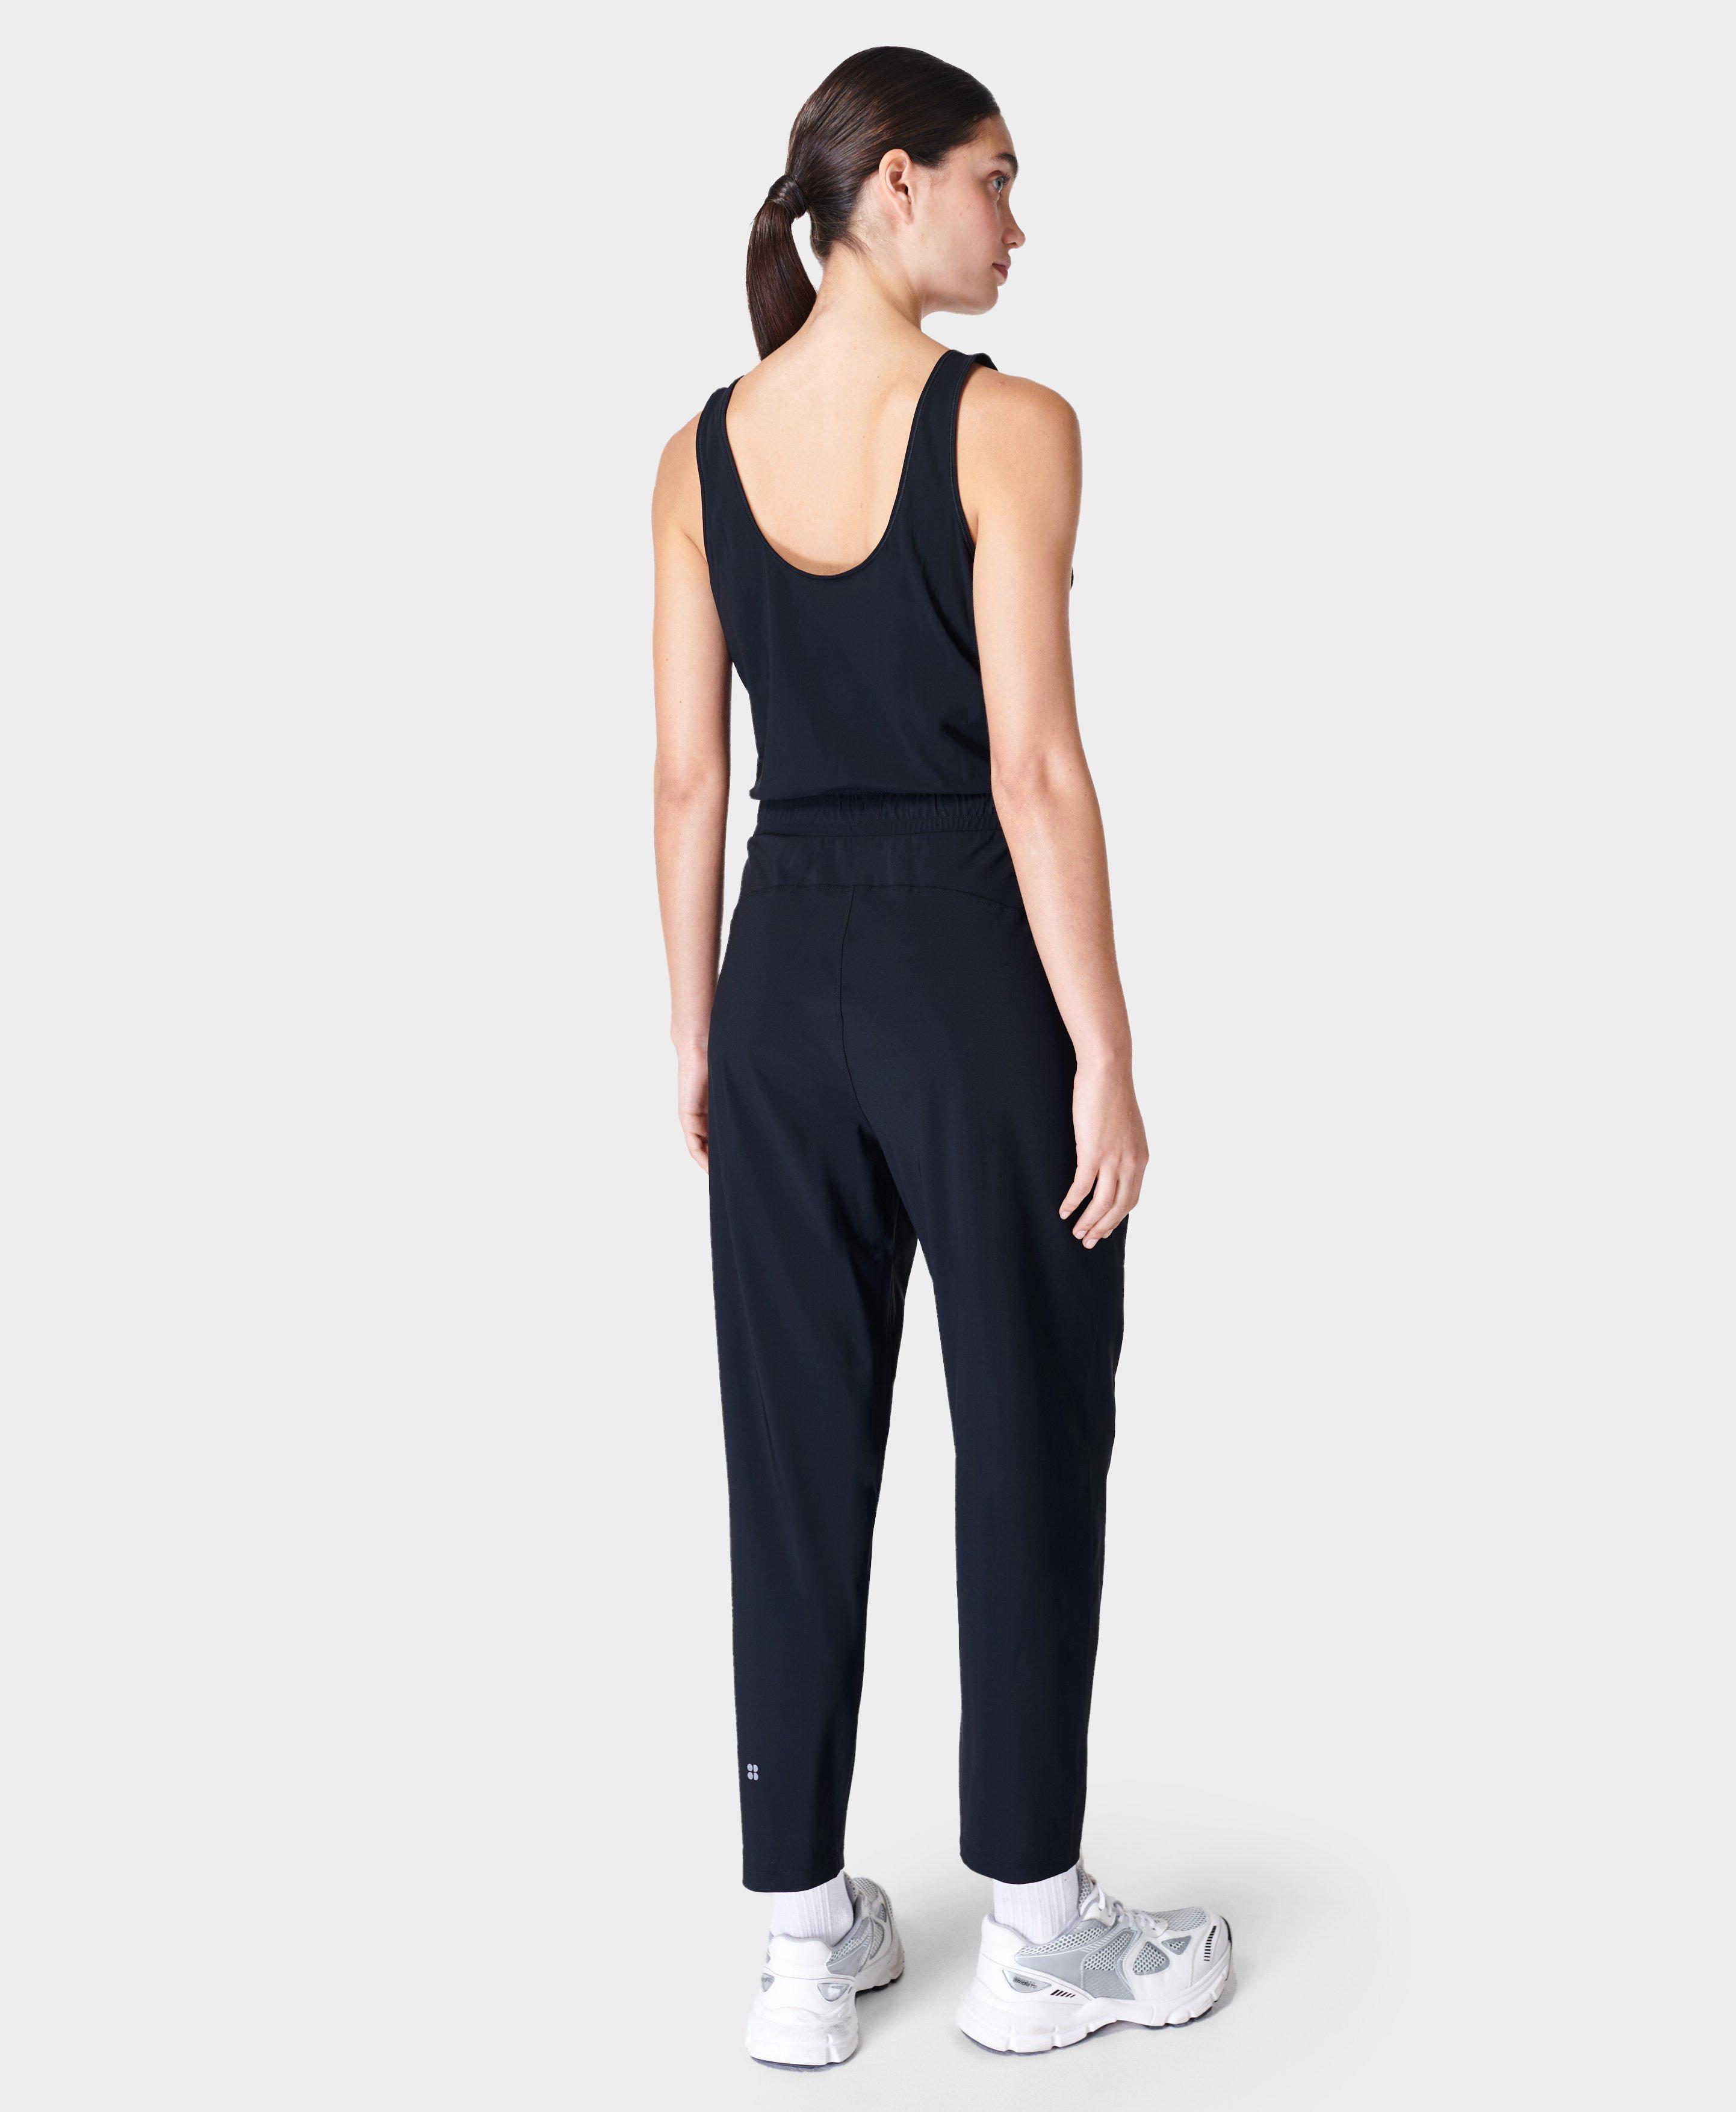 Nike Women's Drawstring Waist Sleeveless Jumpsuit Gray Size Large 